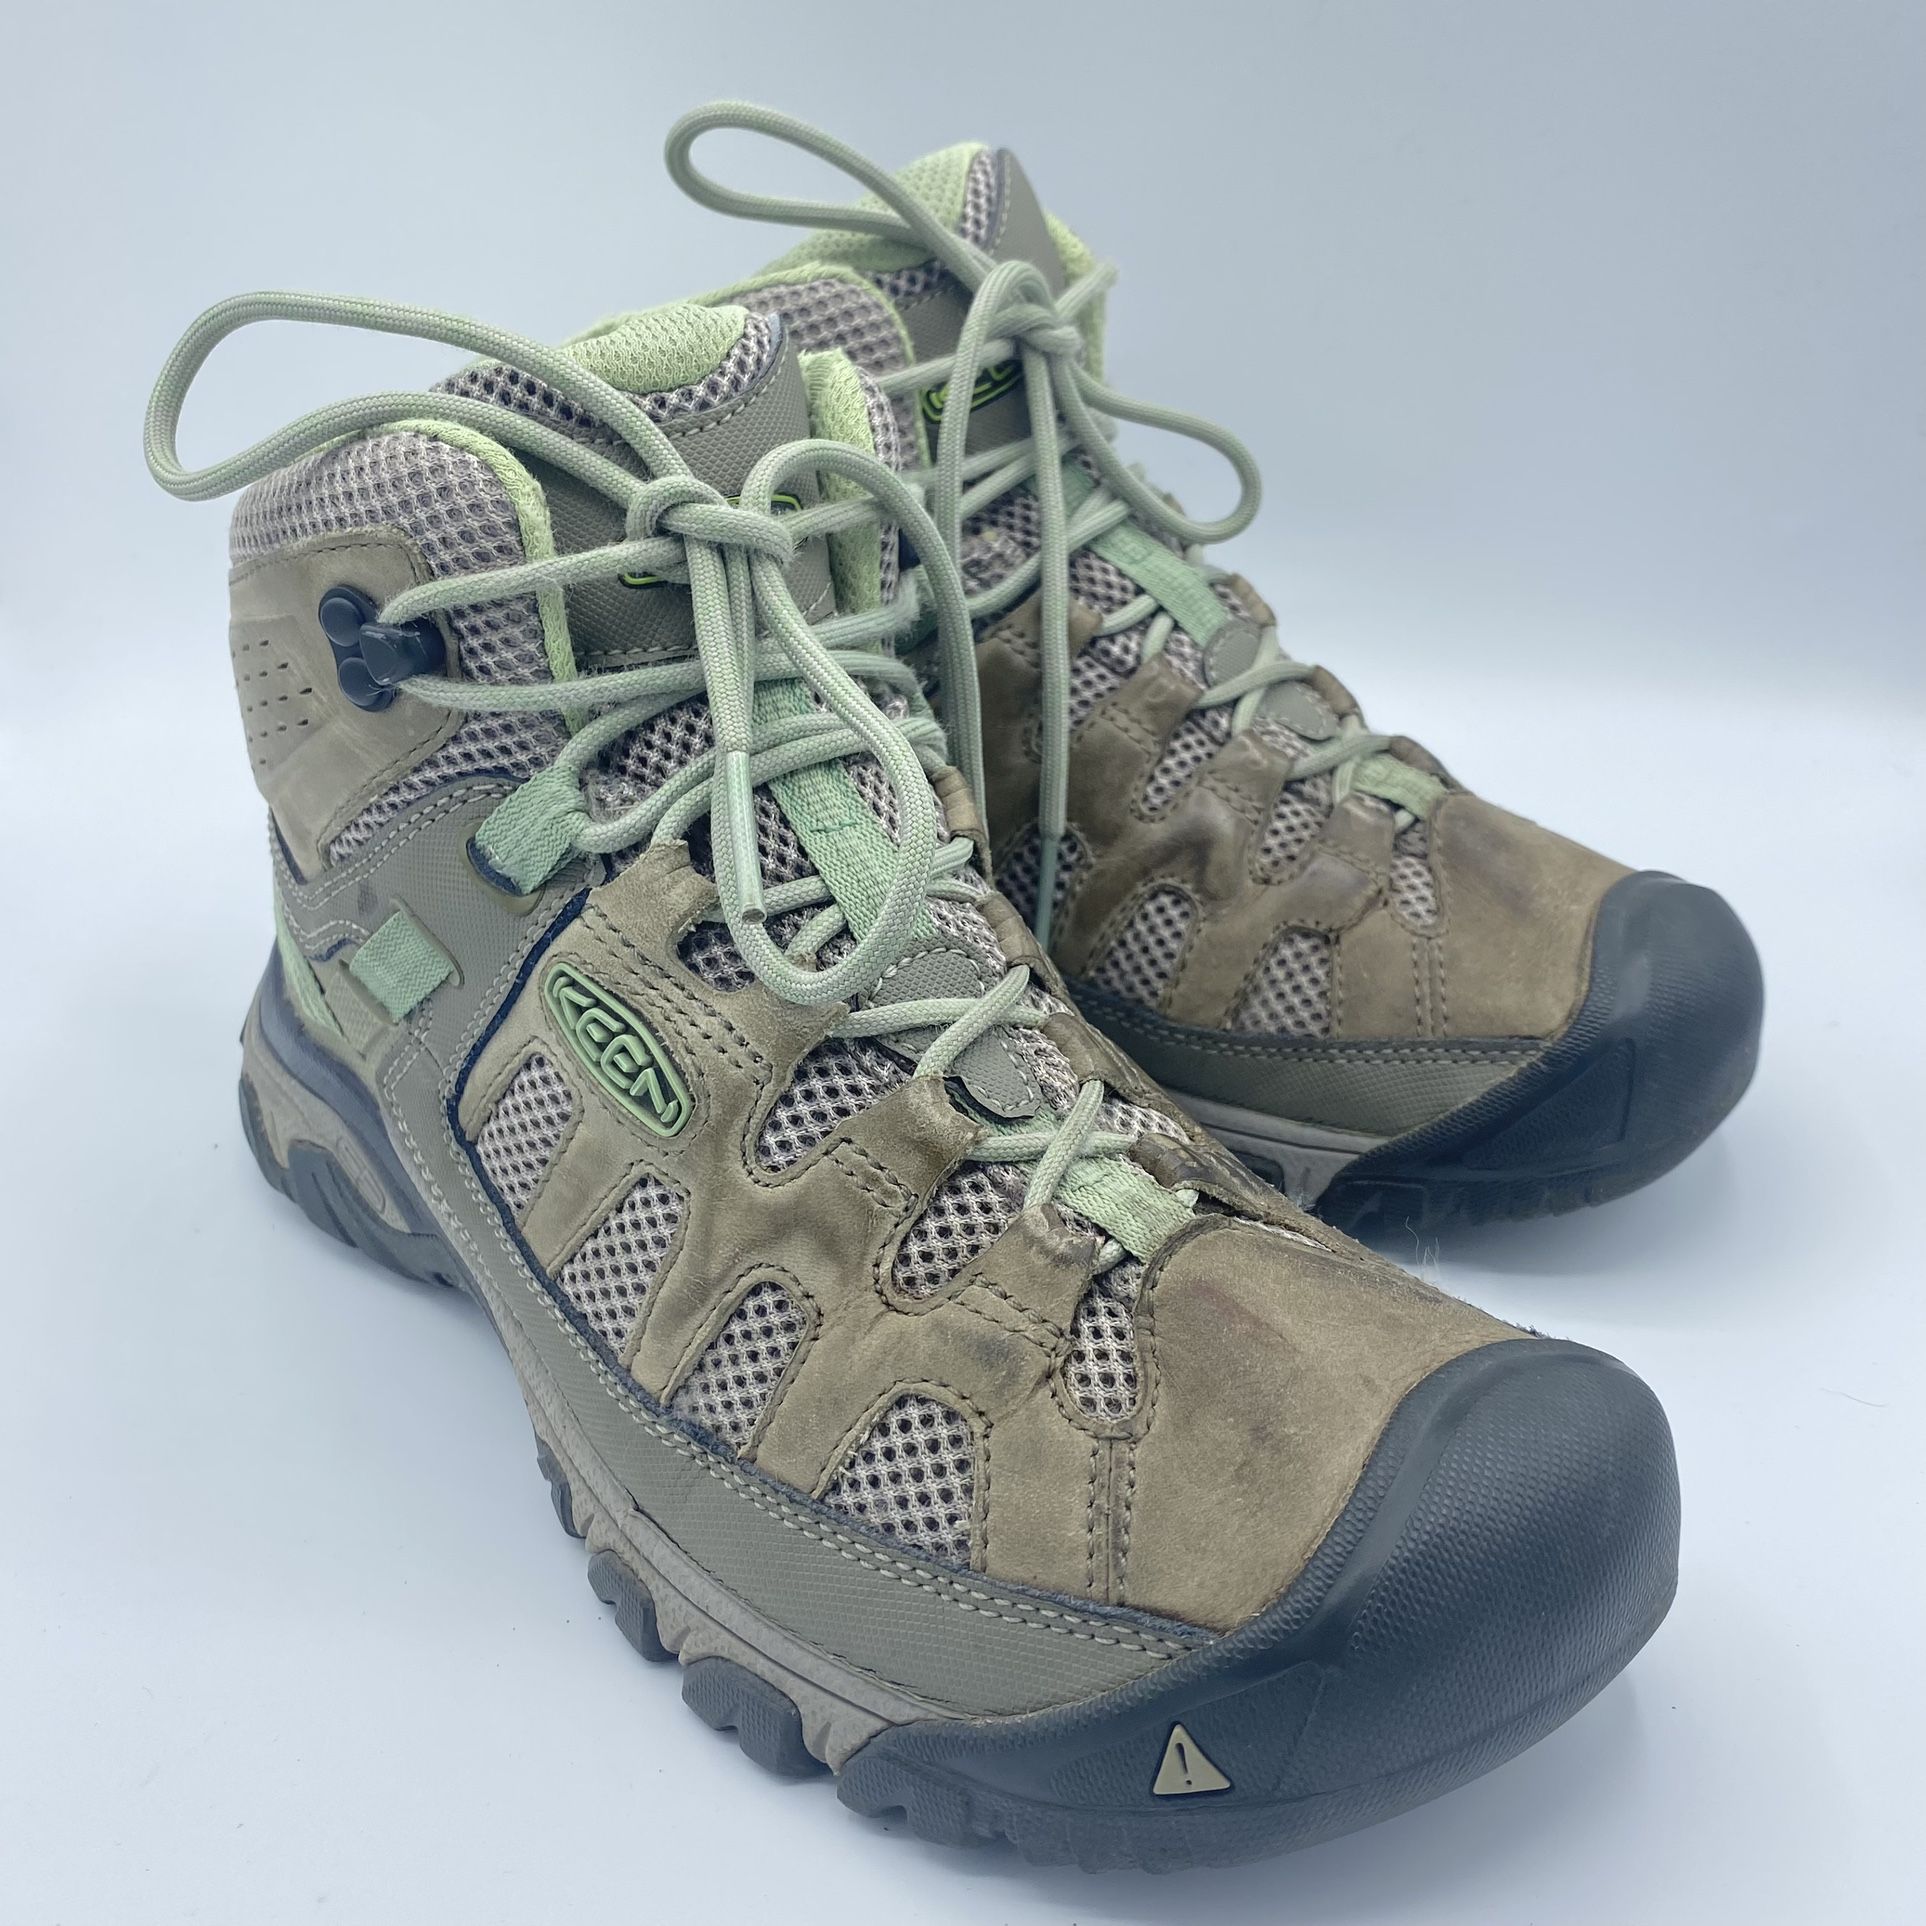  KEEN Women’s Size 9.5 Targhee Vent Mid Hiking Boot 1018589 Fumo/Quiet Green